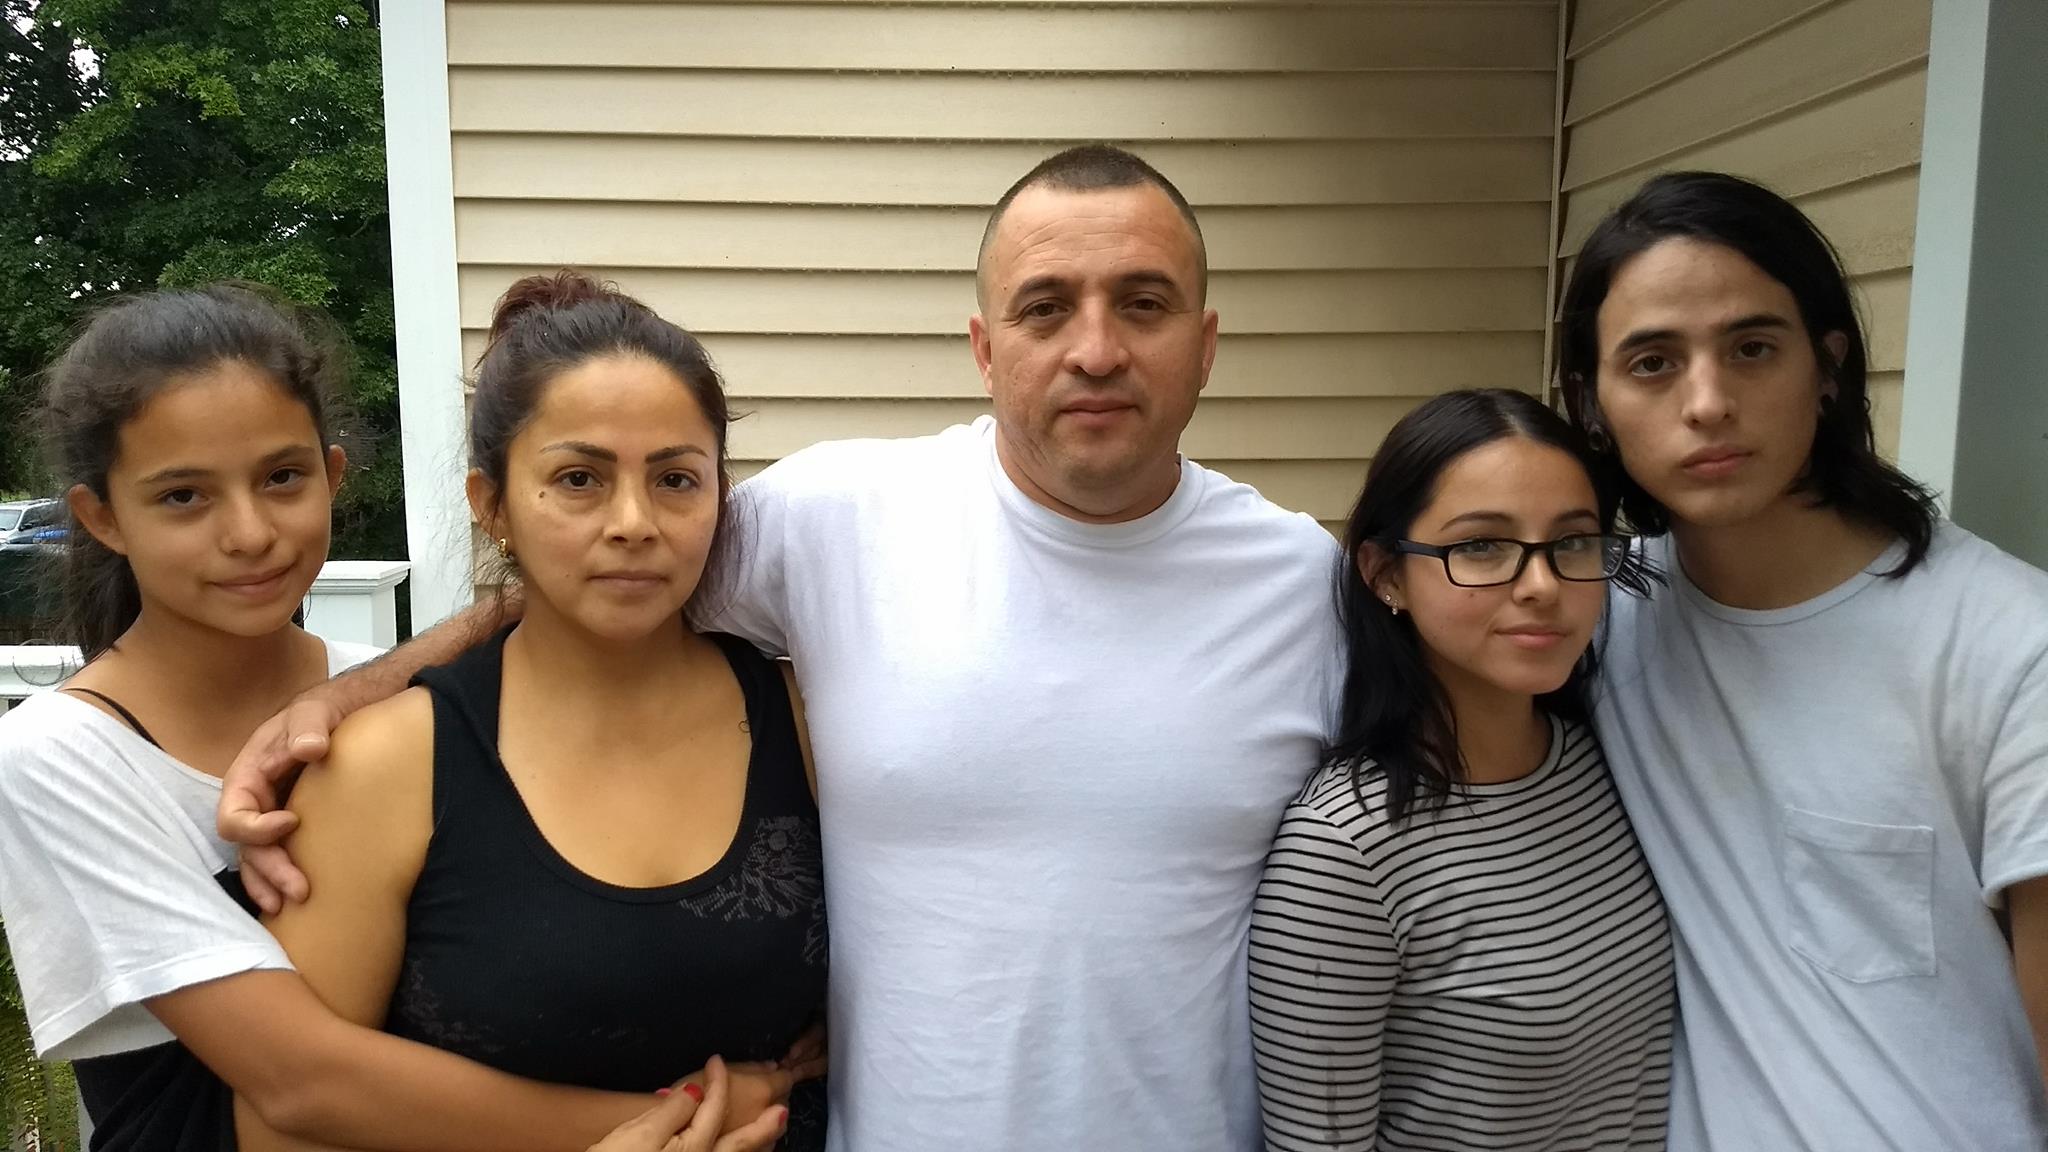 Communities demand ICE stop separating families